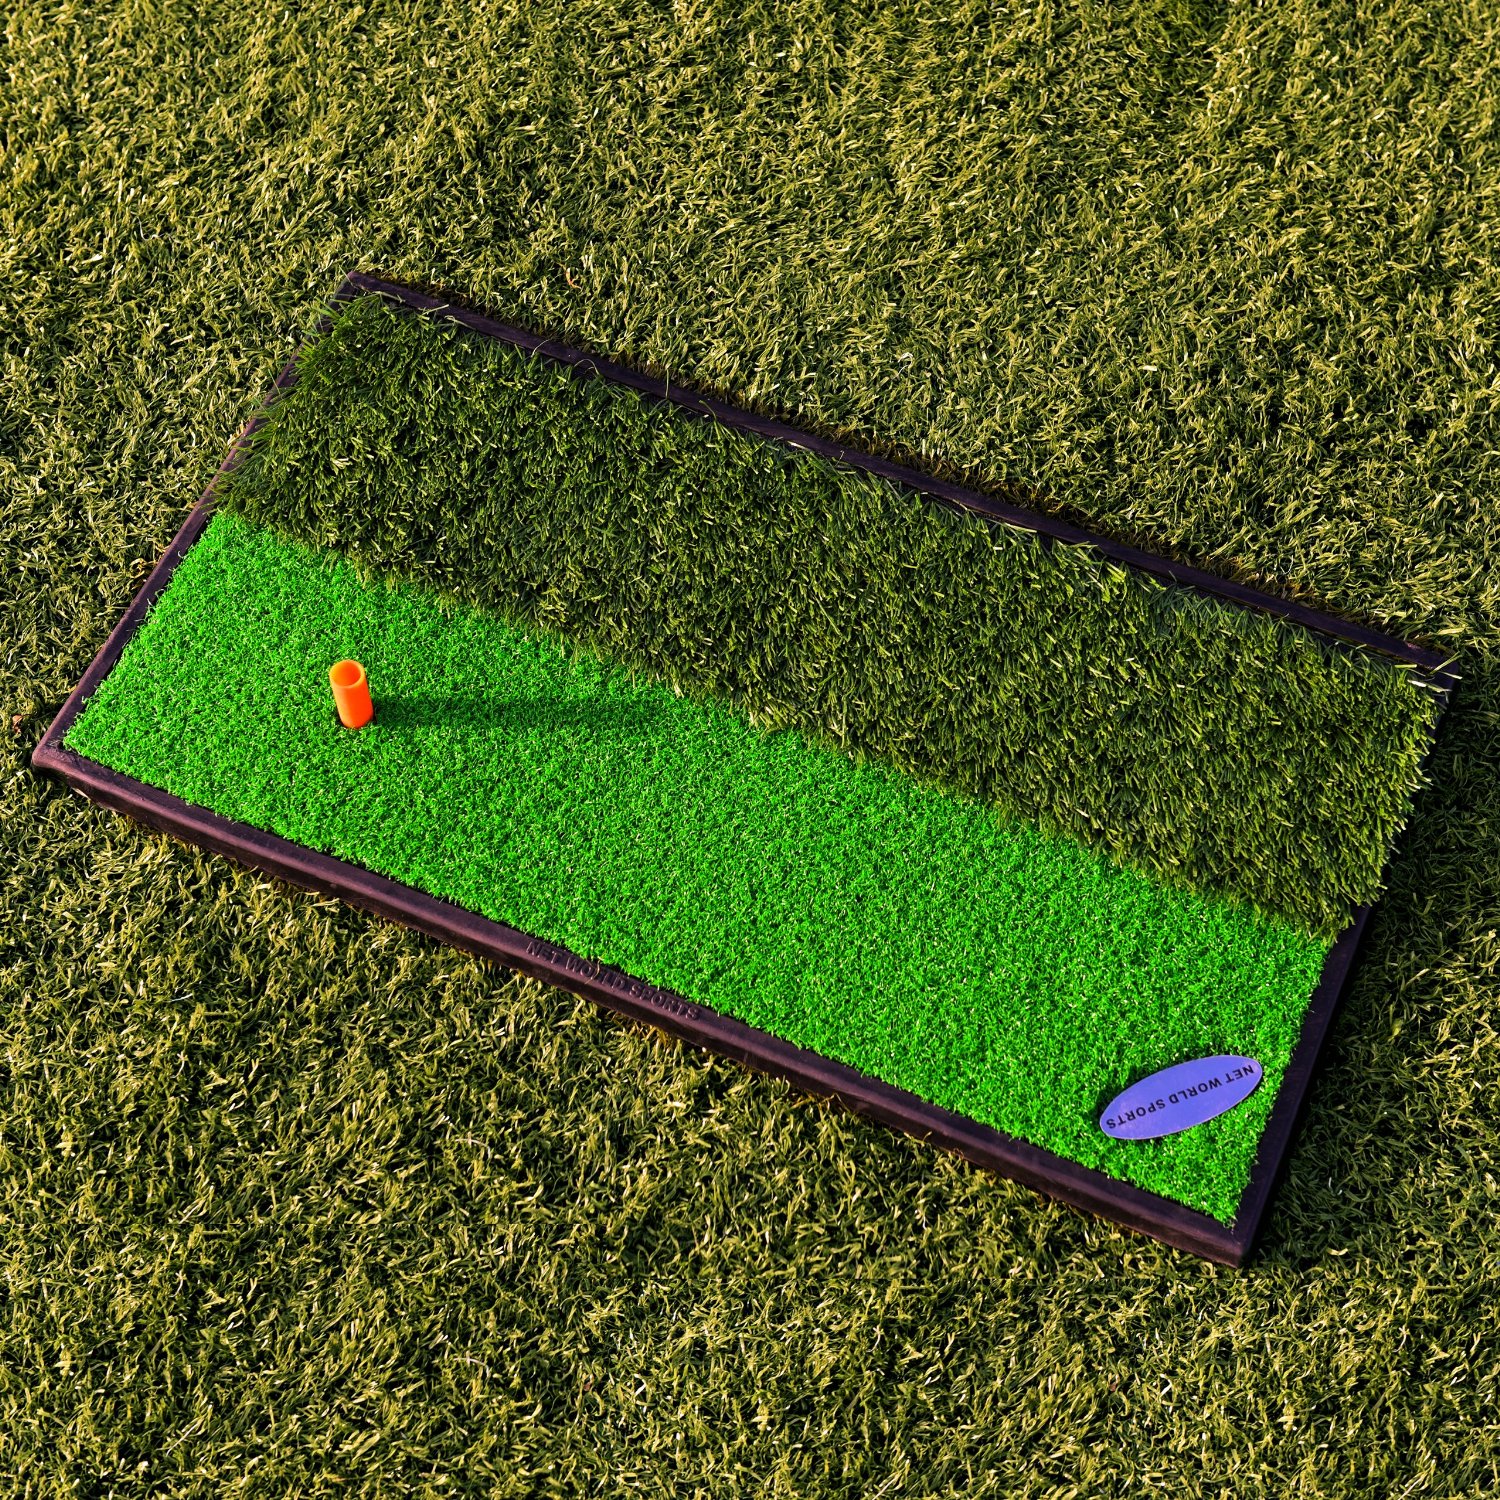 Net World Sports FORB Launch Pad Golf Practice Mats